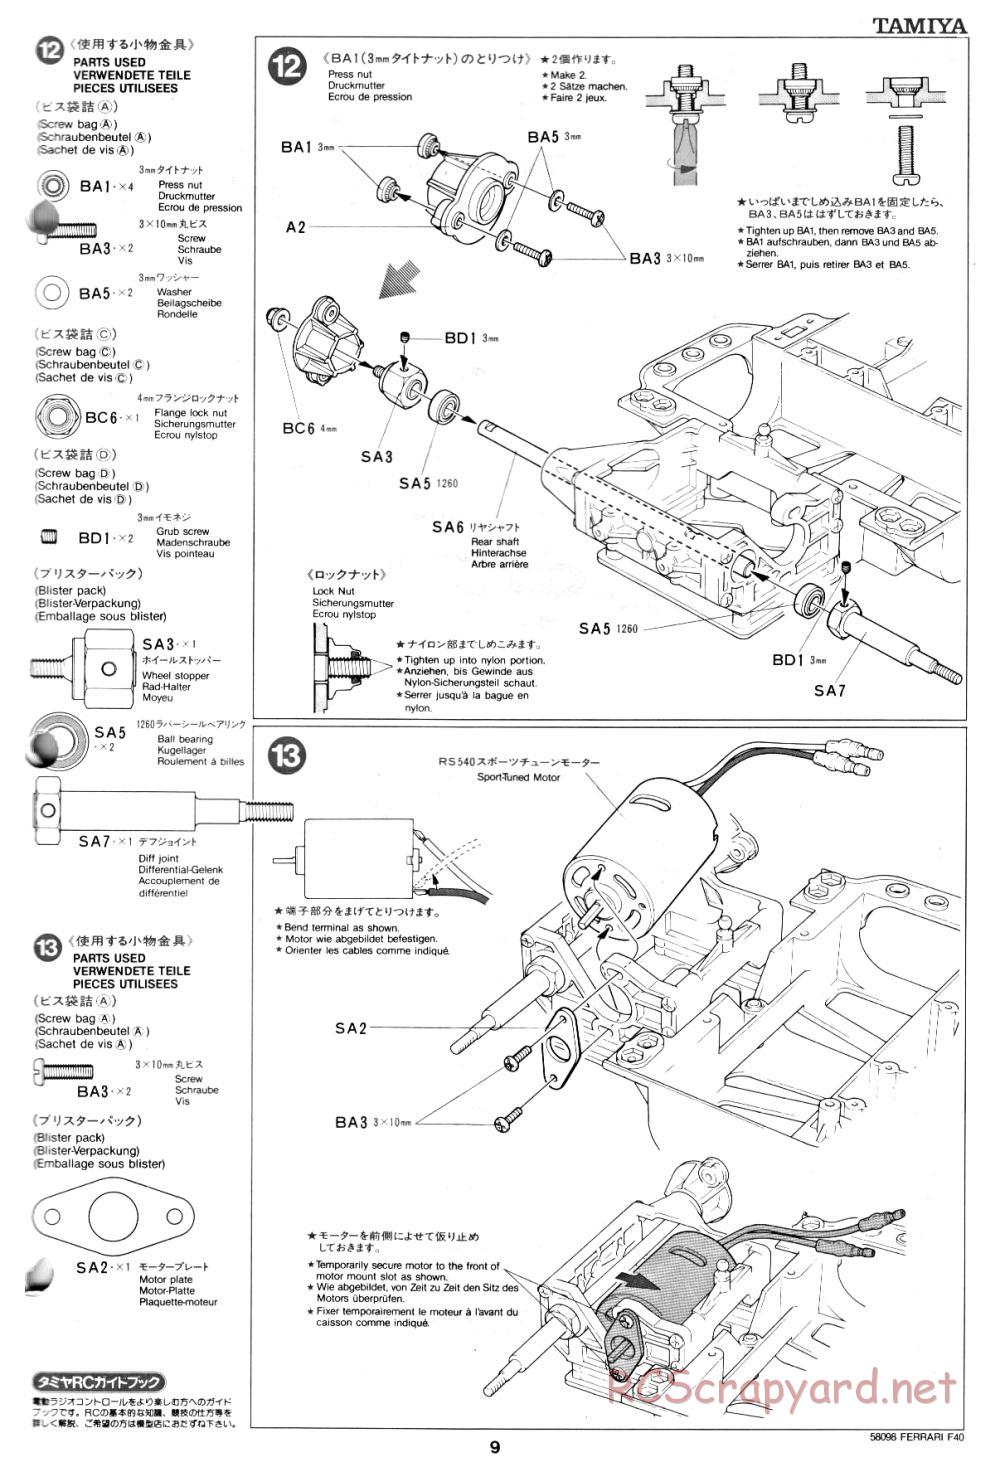 Tamiya - Ferrari F40 - 58098 - Manual - Page 9